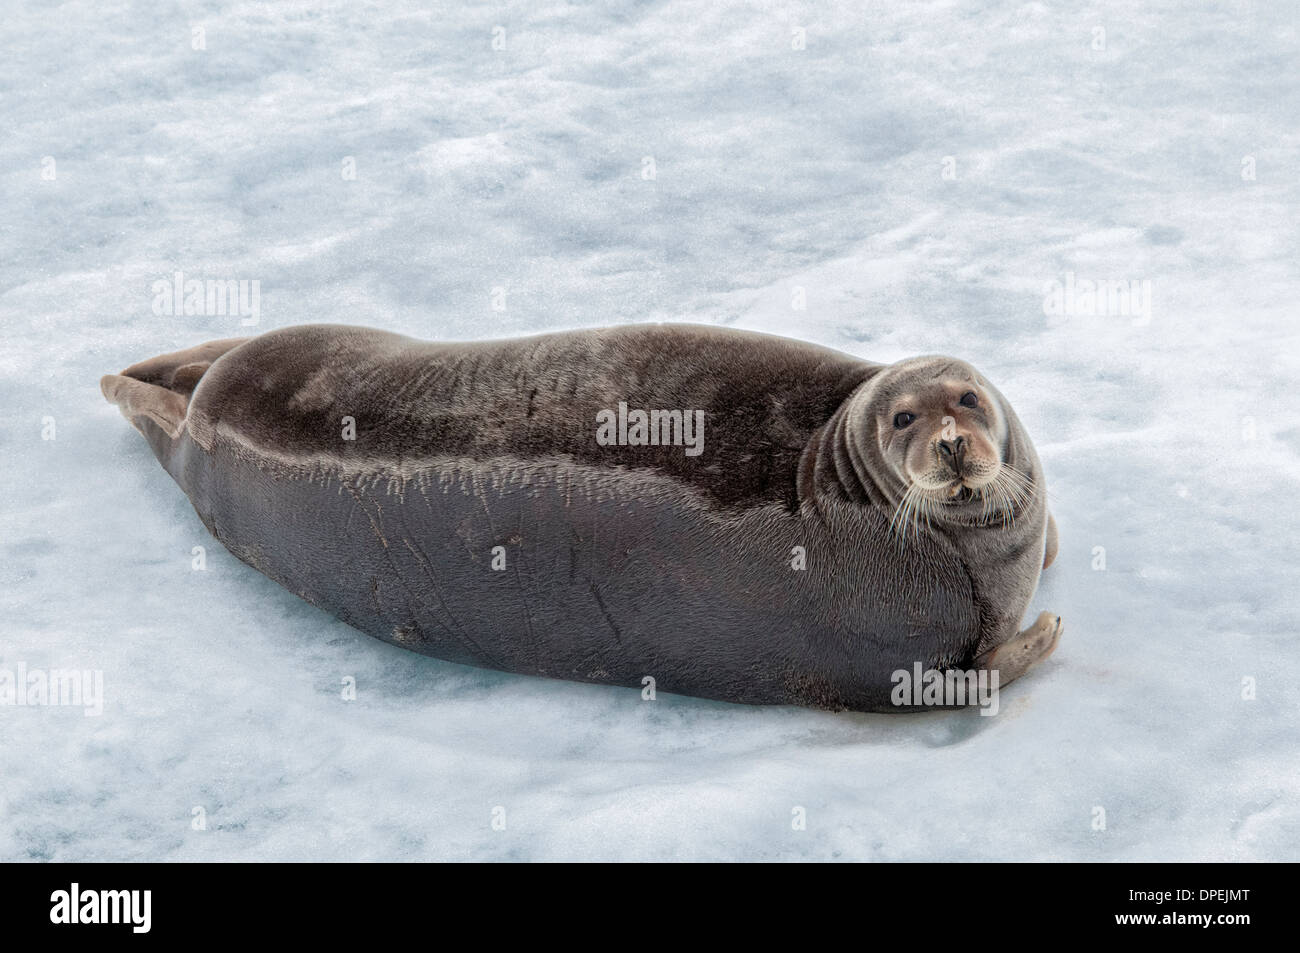 Bearded Seal or Square Flipper Seal, Erignathus barbatus, lying on the ice, Hinlopen Strait, Svalbard Archepelago, Norway Stock Photo